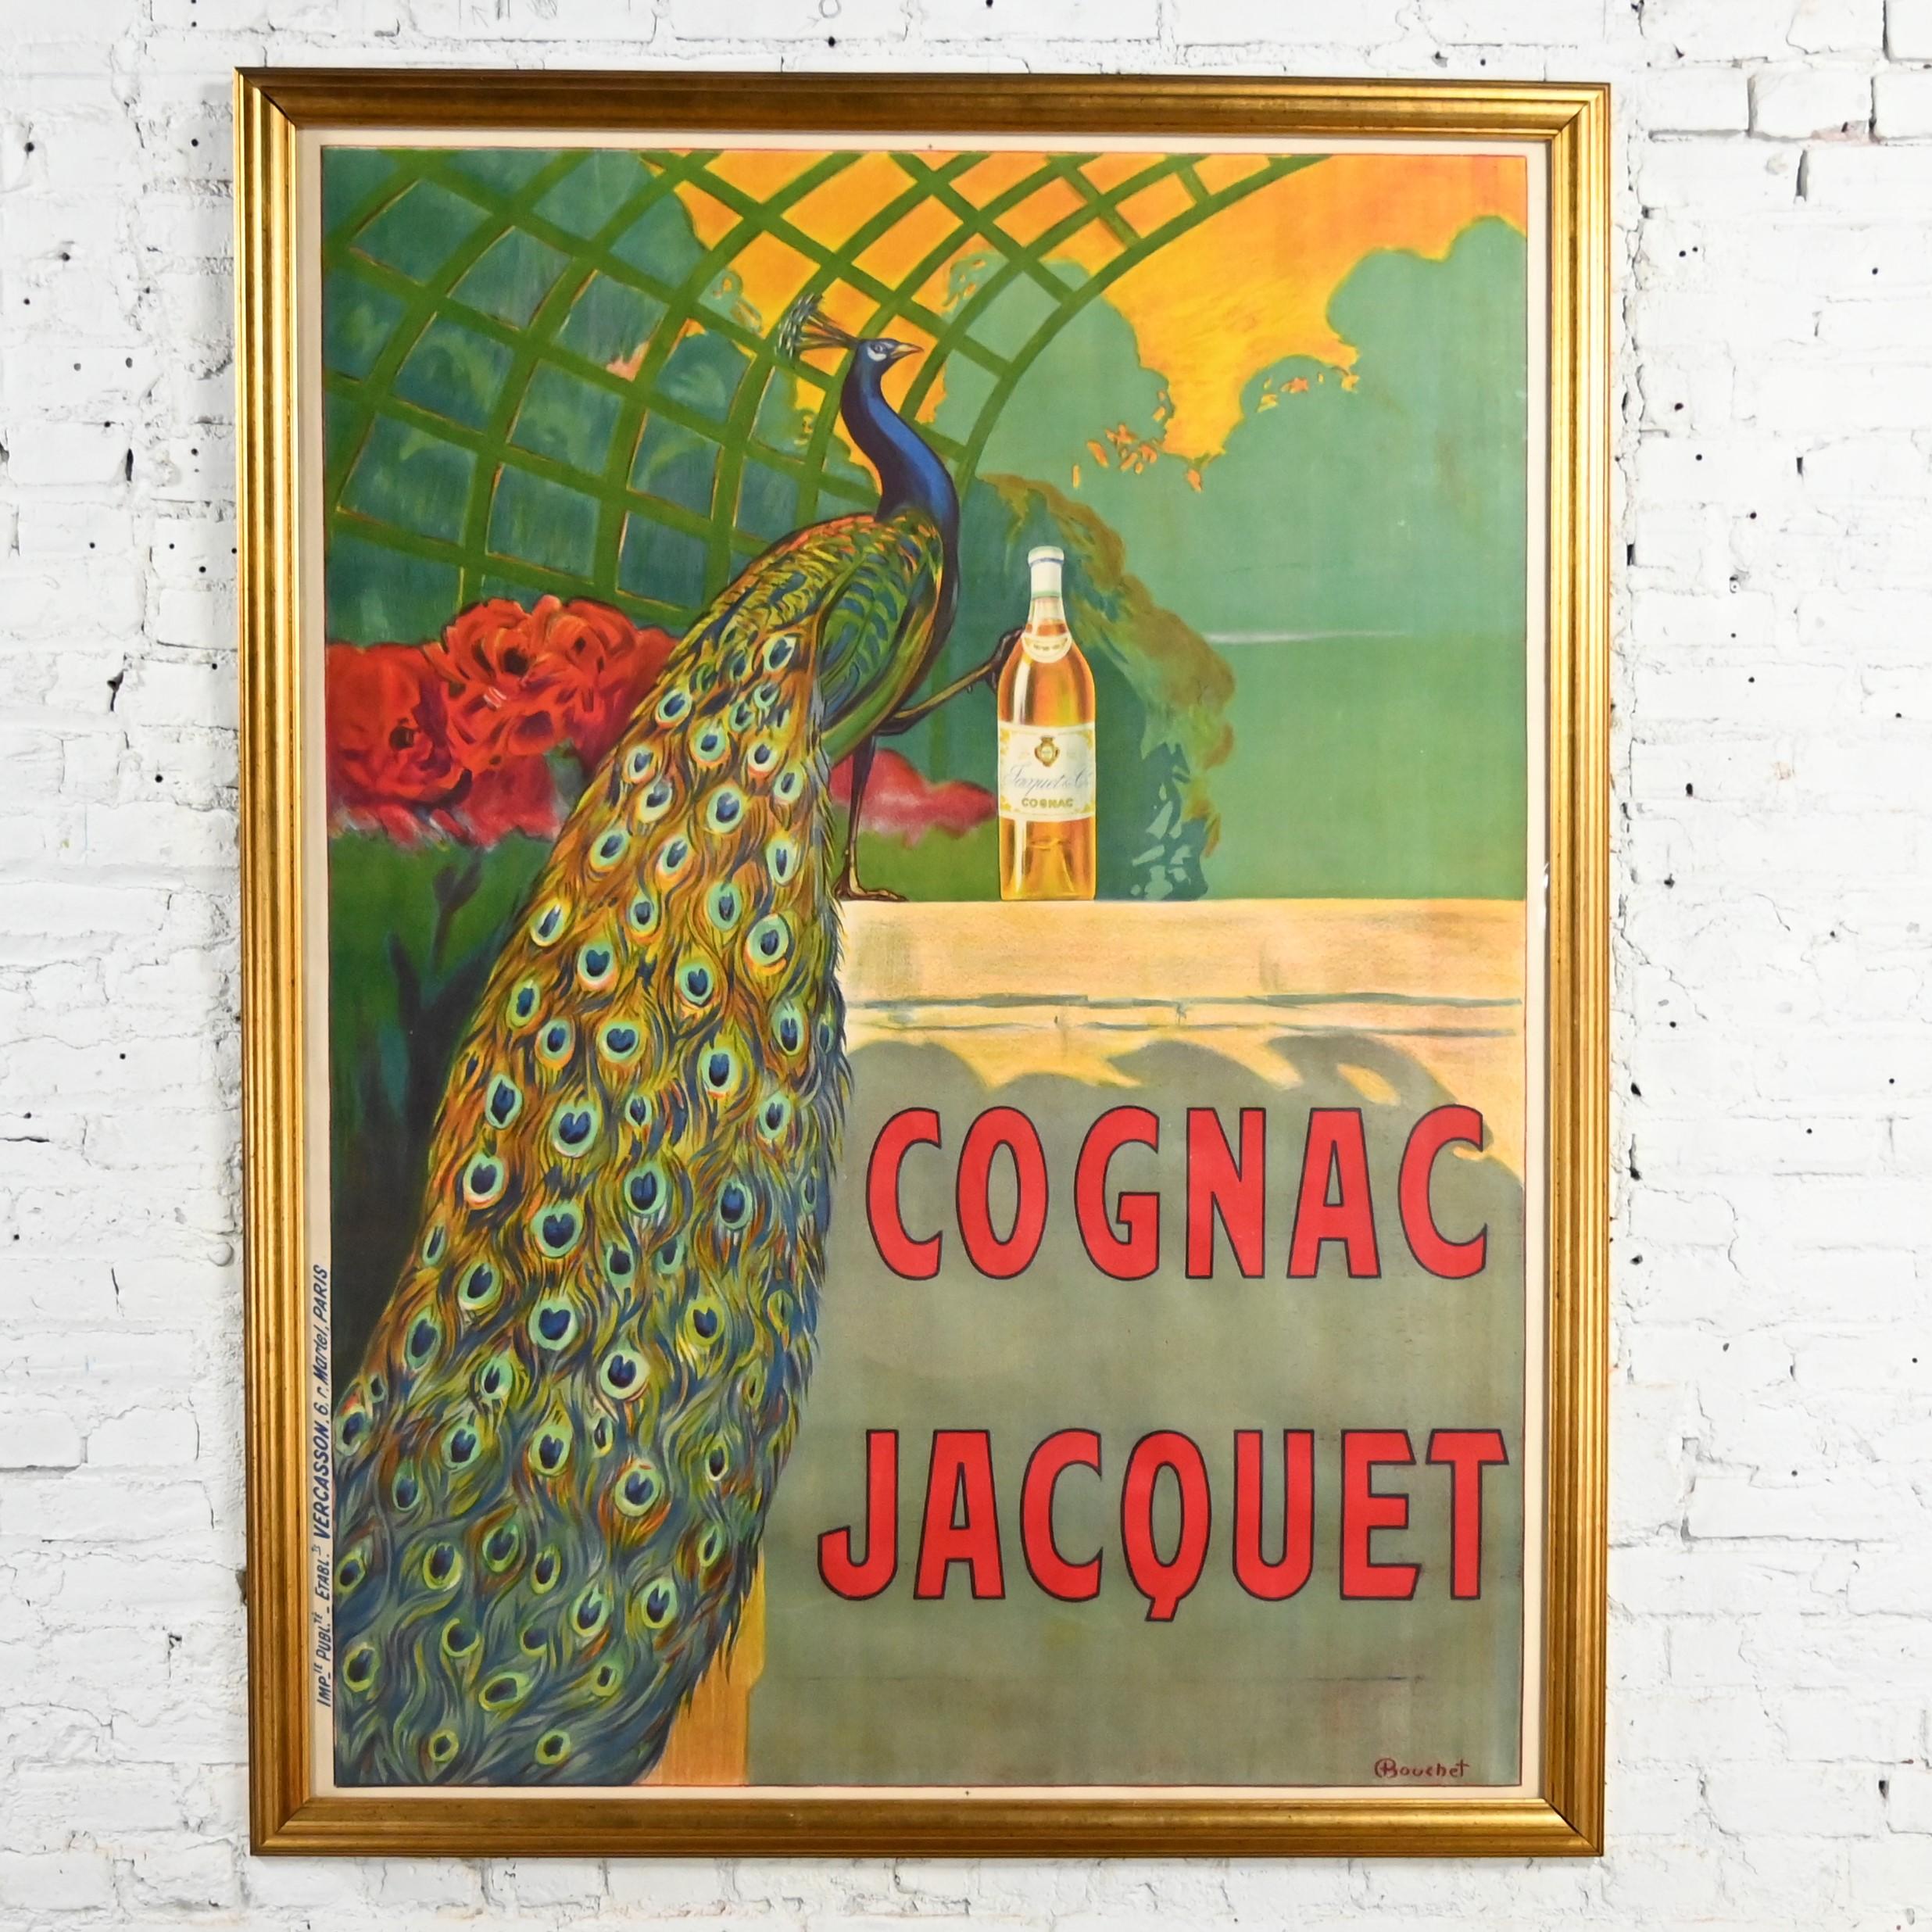 20th Century Bouchet Antique Art Deco Art Nuovo Cognac Jacquet Advertising Peacock Poster